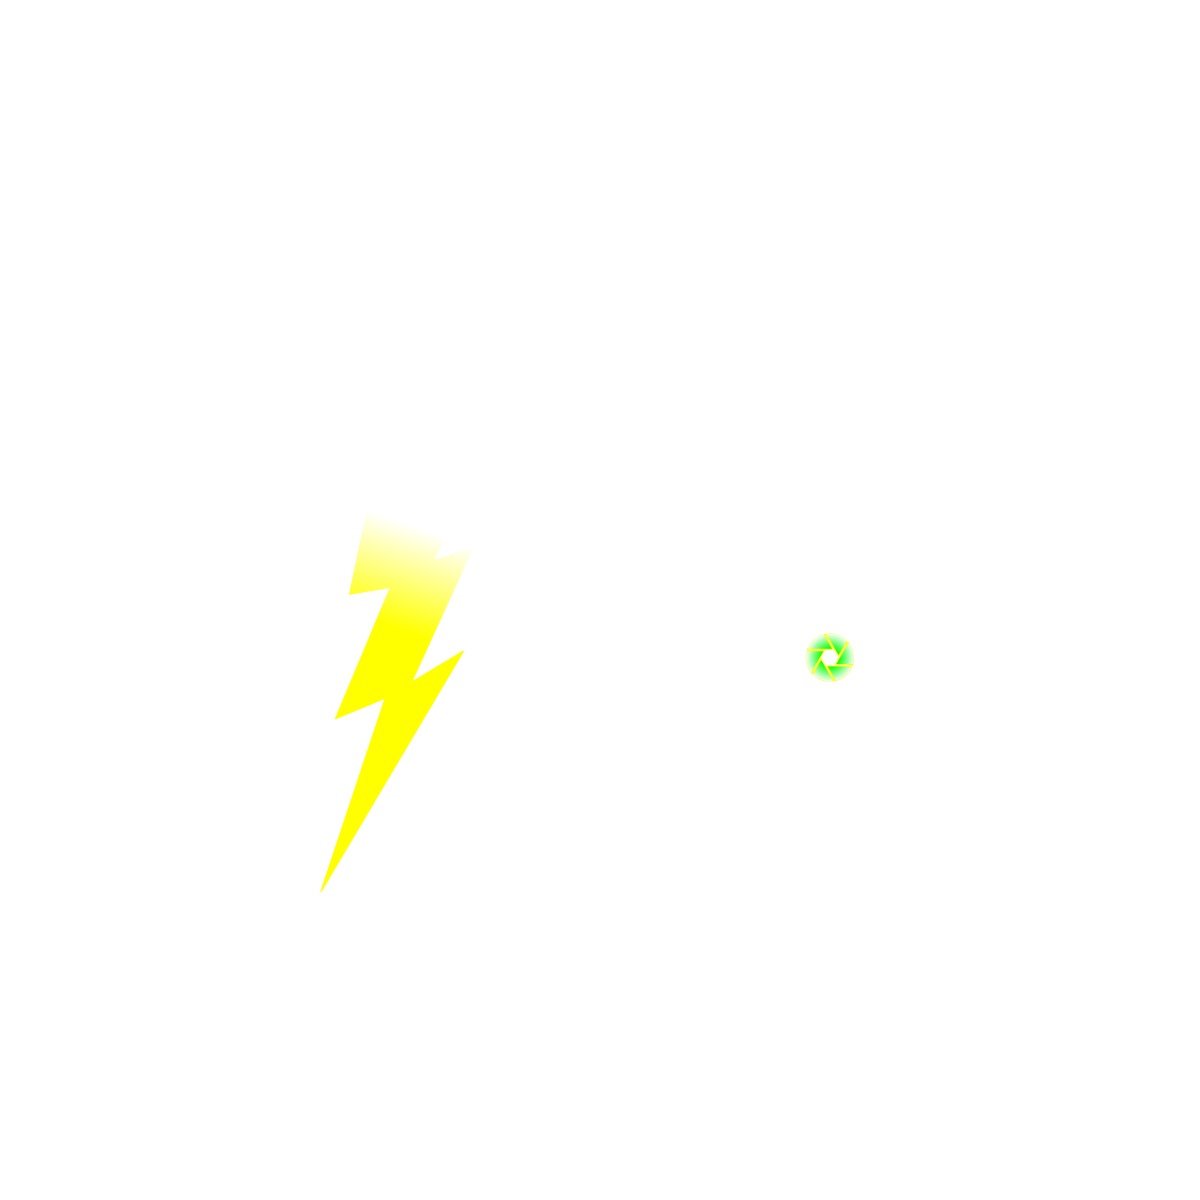 Flash That PhotoBooth